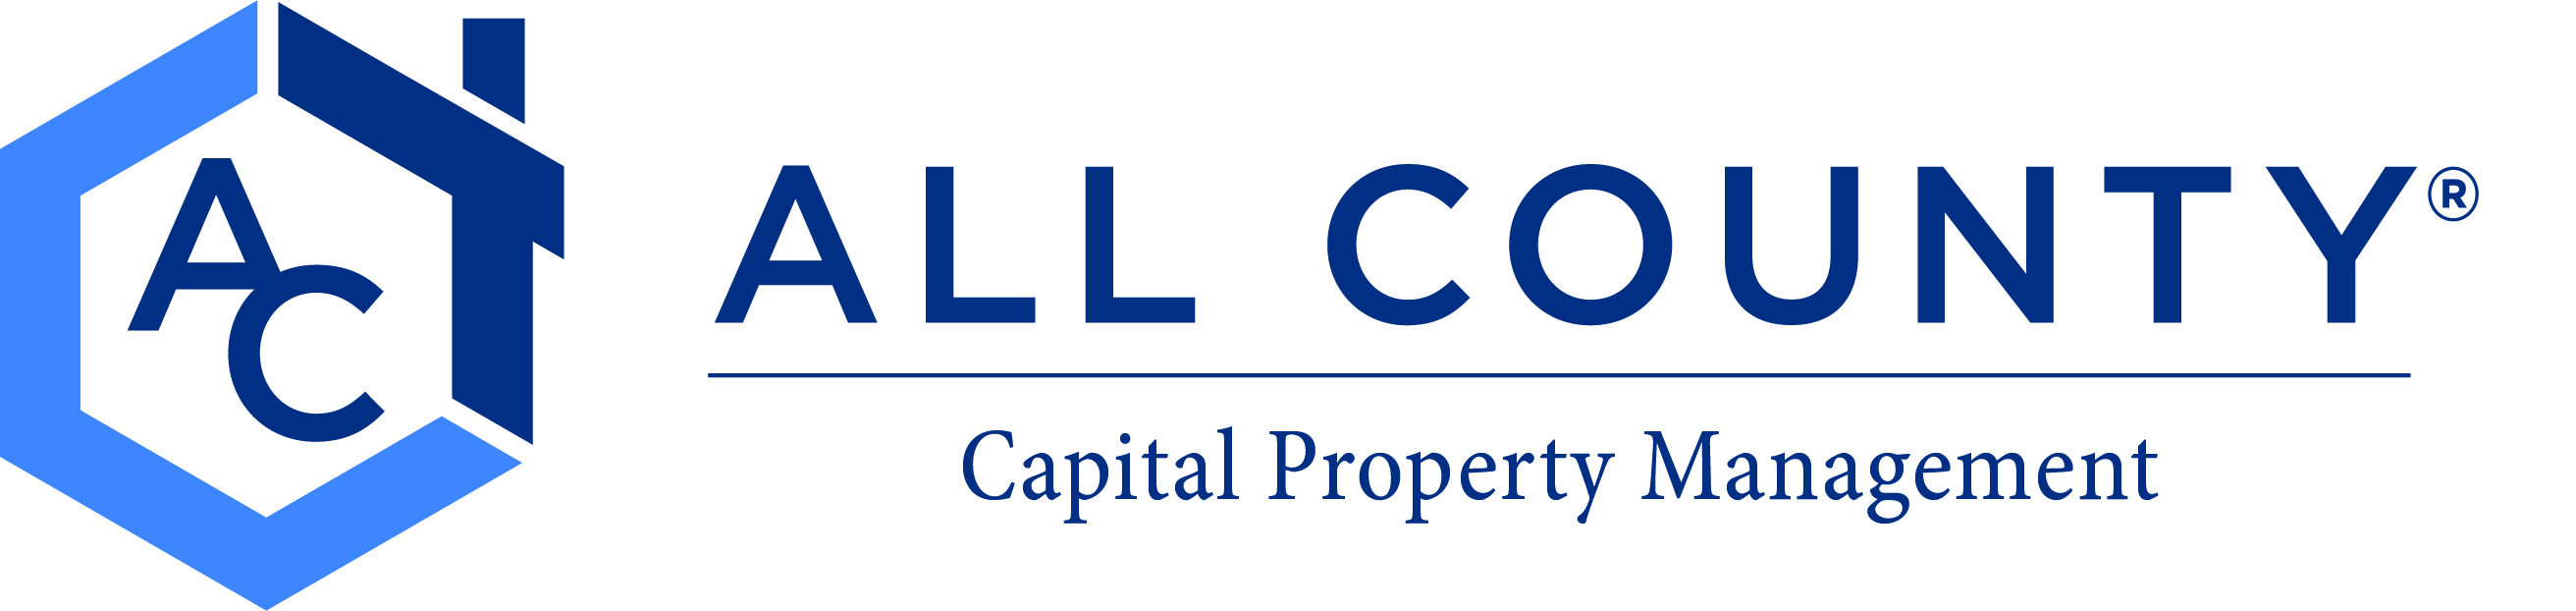 All County capital logo